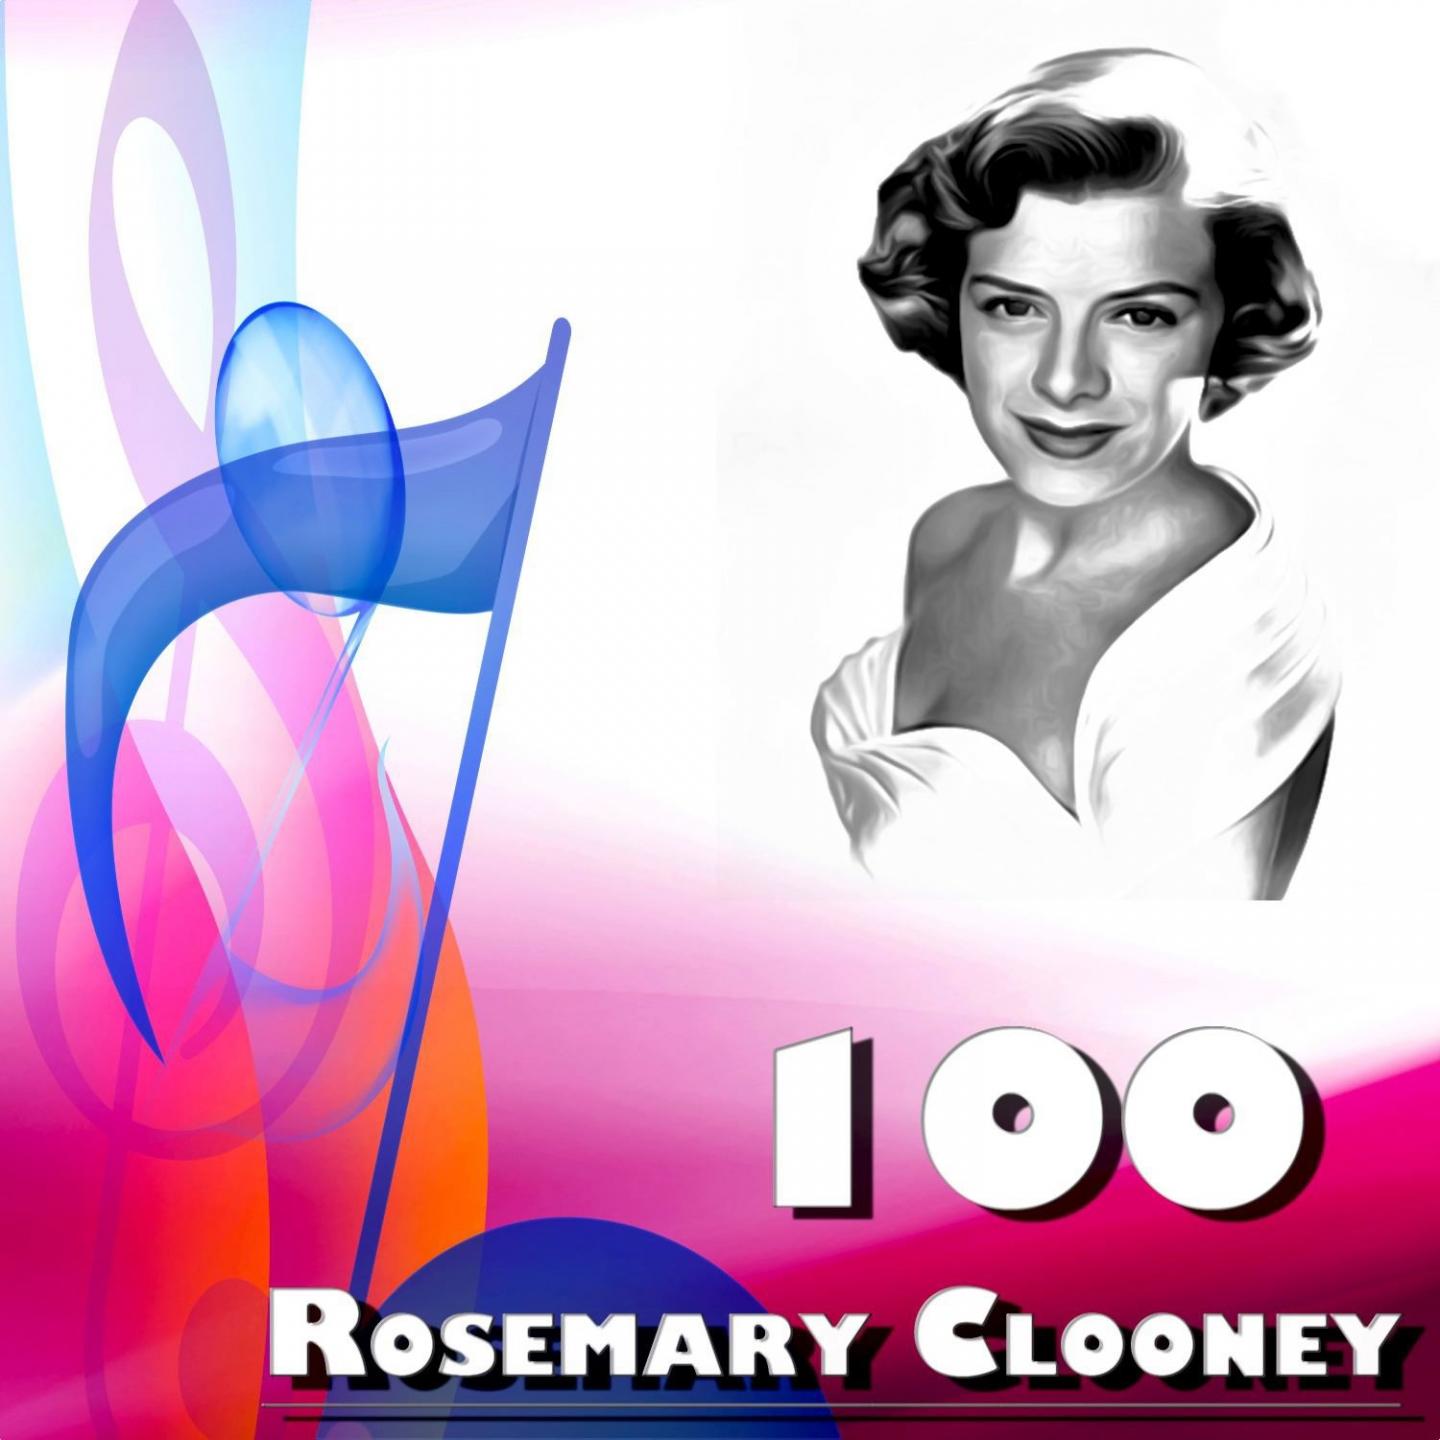 Isle of Capri (Rosemary Clooney with Bing Crosby)